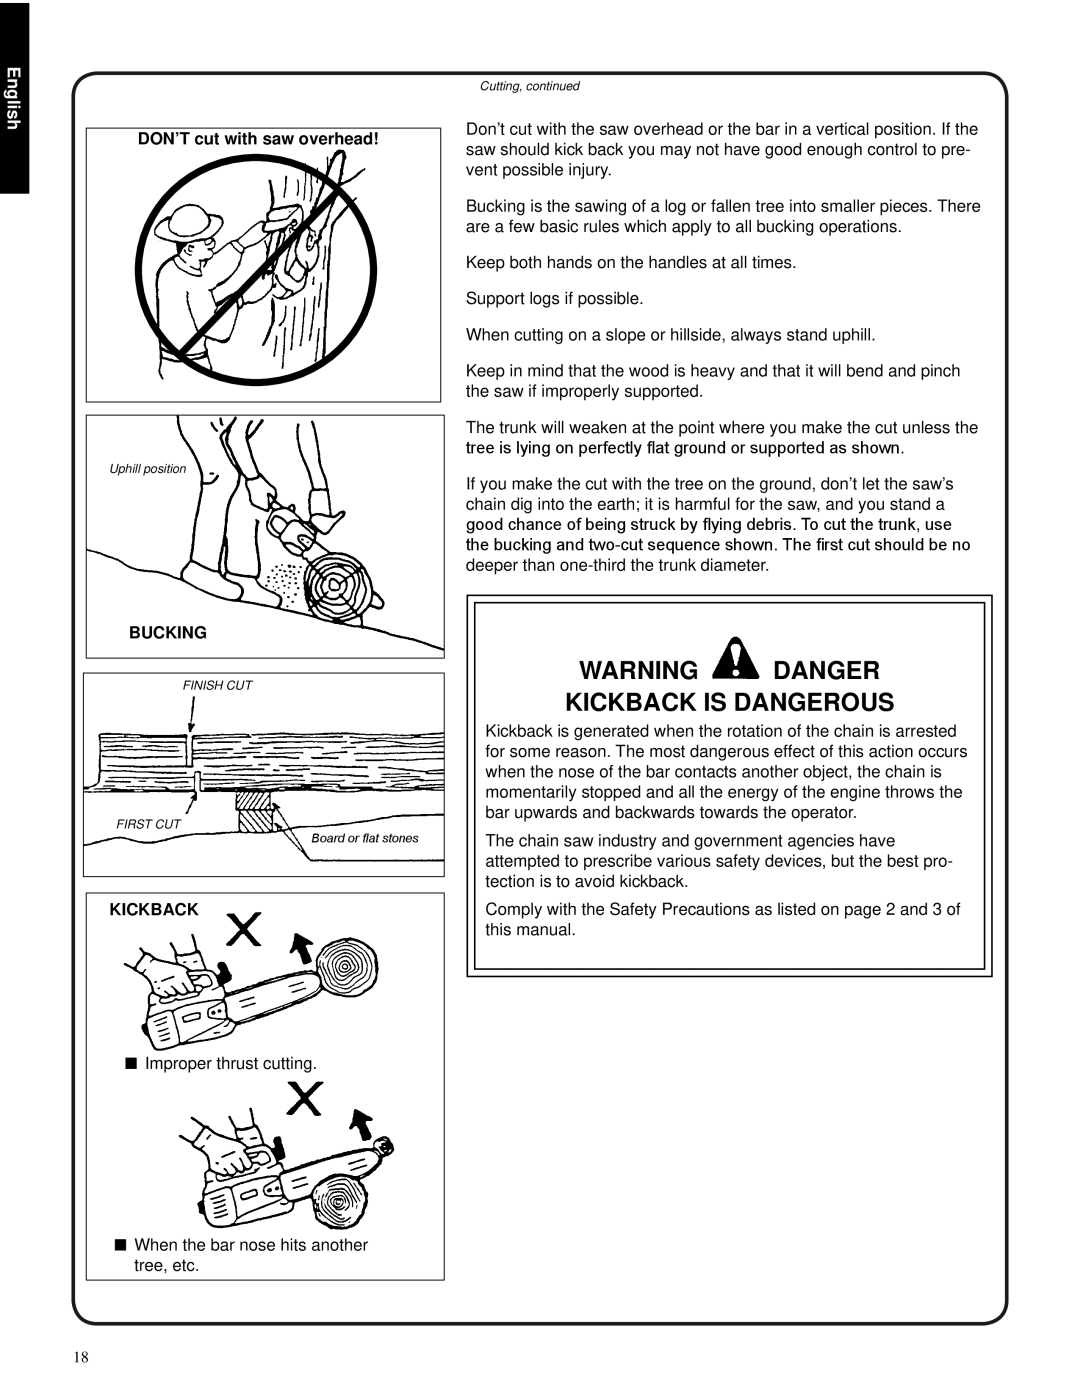 Shindaiwa 82085, 326T manual Warning Danger Kickback Is Dangerous, DON’T cut with saw overhead, Bucking, English 